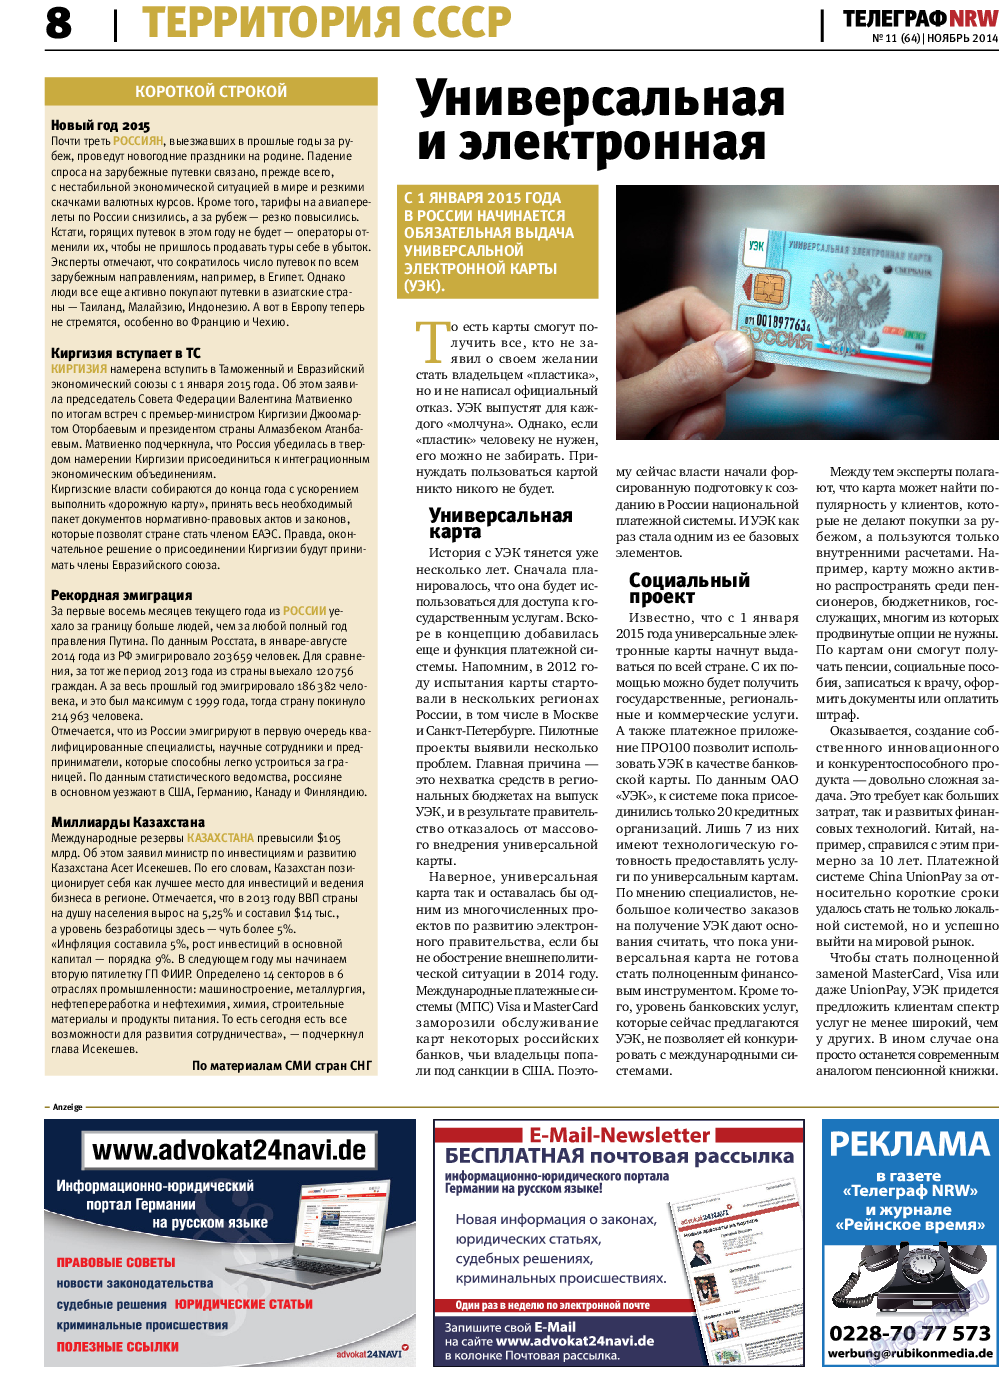 Телеграф NRW, газета. 2014 №11 стр.8